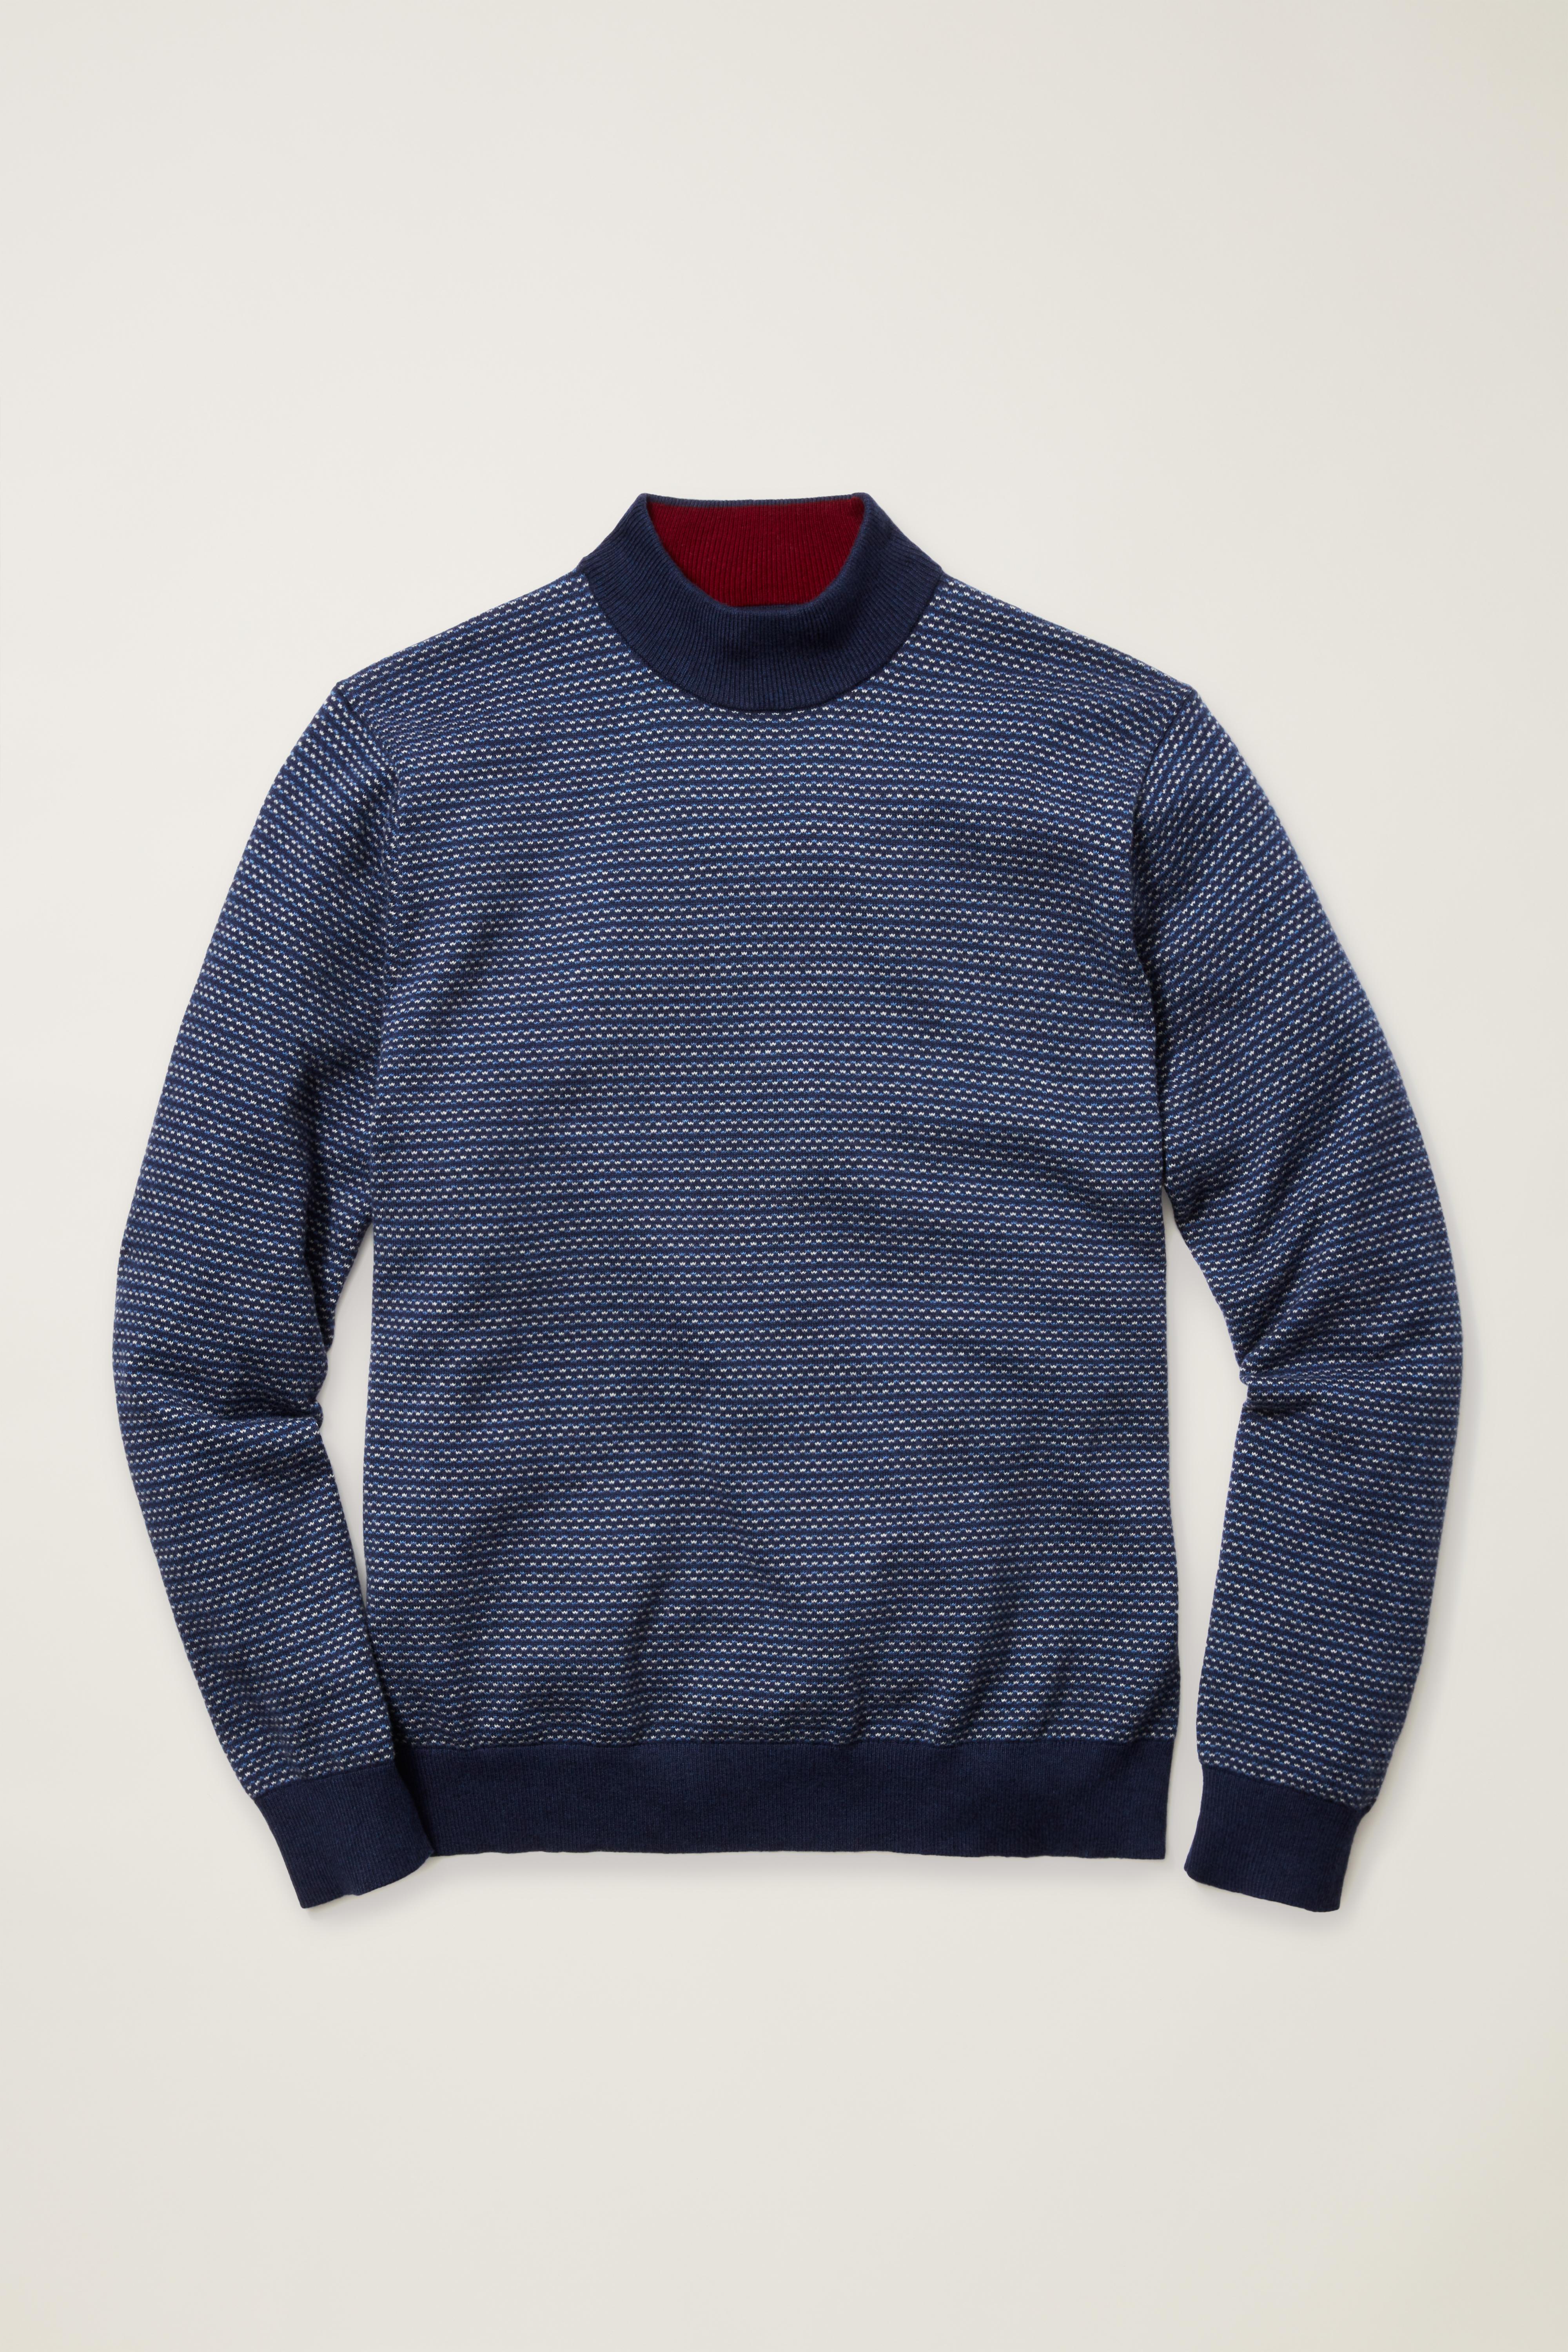 Cotton Cashmere Mock Neck Sweater